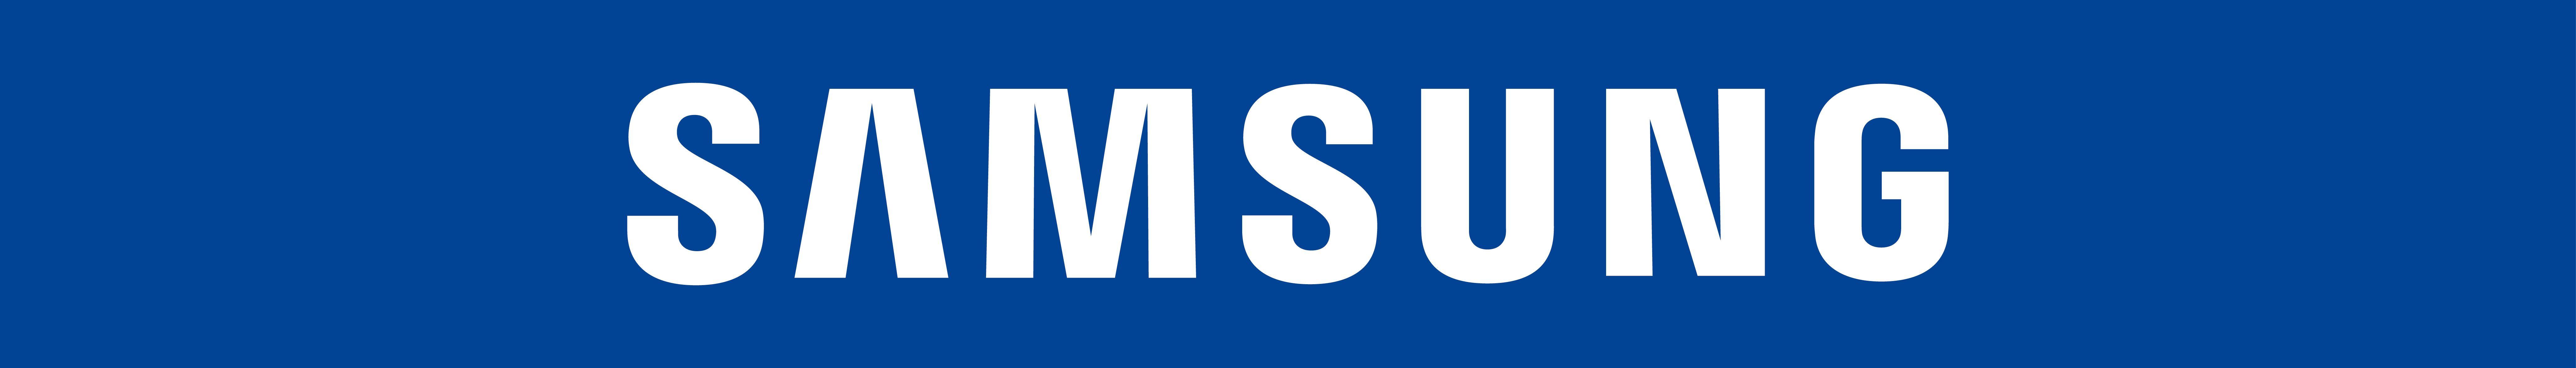 Samsung Logo - Samsung 22